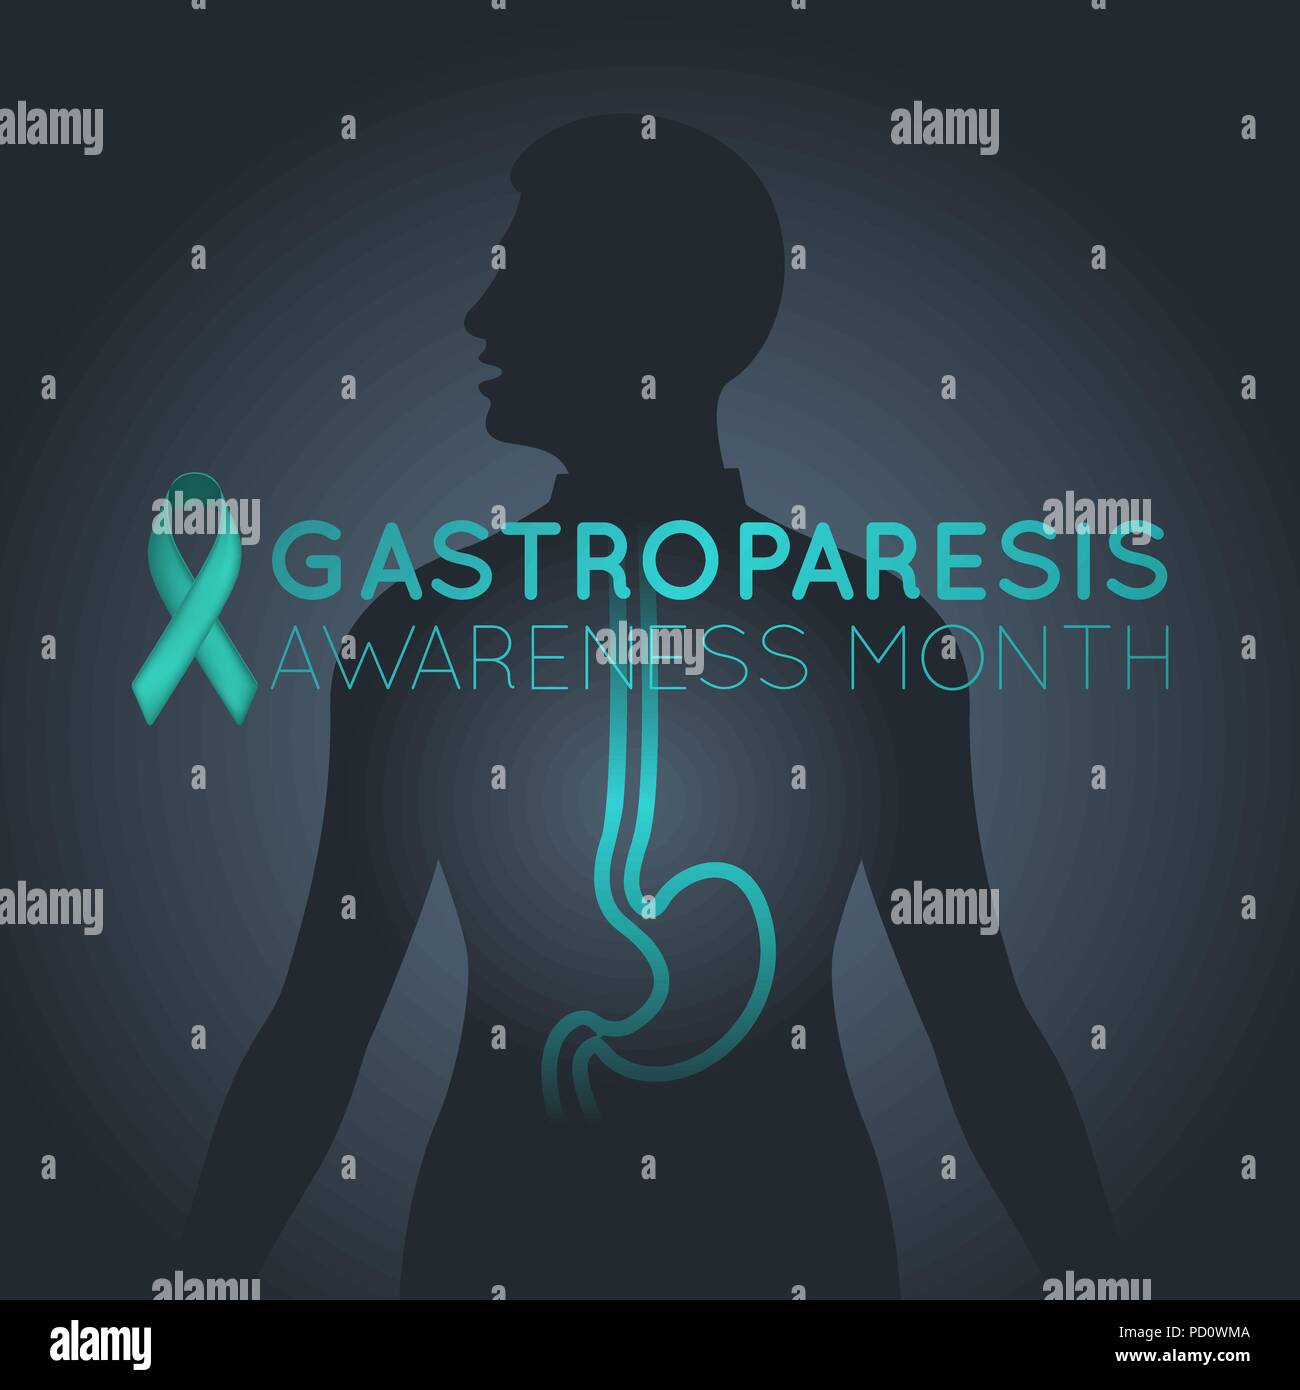 Gastroparesis Awareness Month vector logo icon illustration Stock Vector